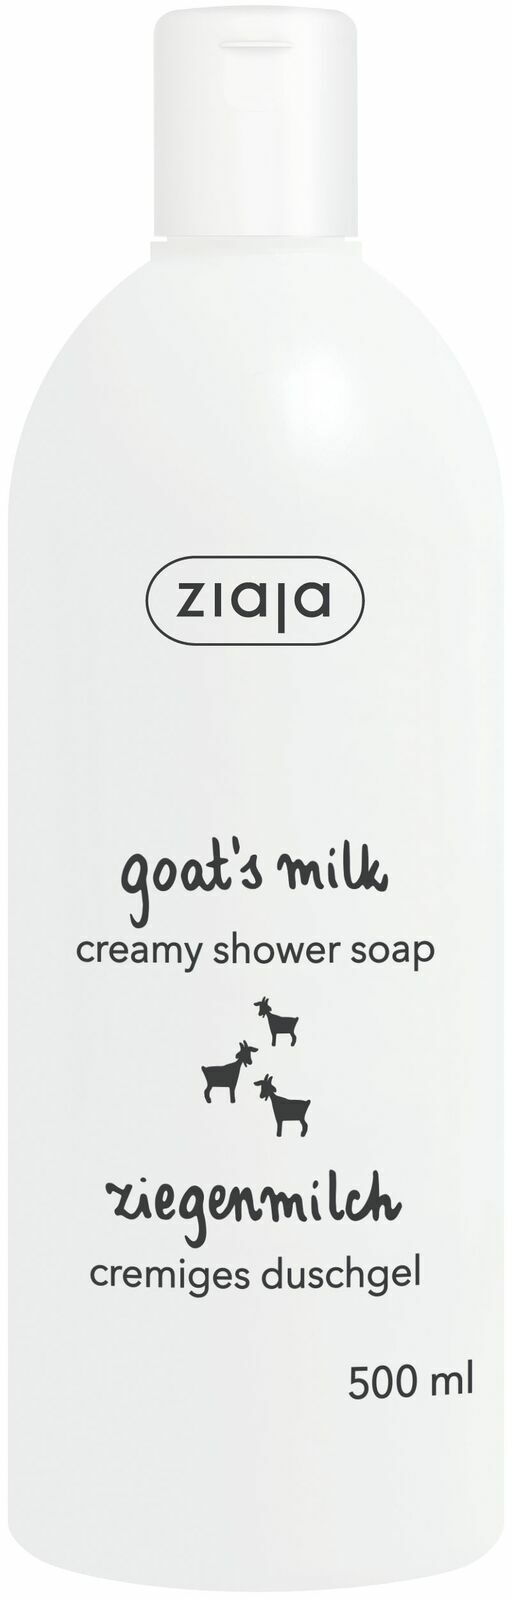 Ziaja Goat's Milk Creamy Shower Soap - Intensely Moisturising 500ml